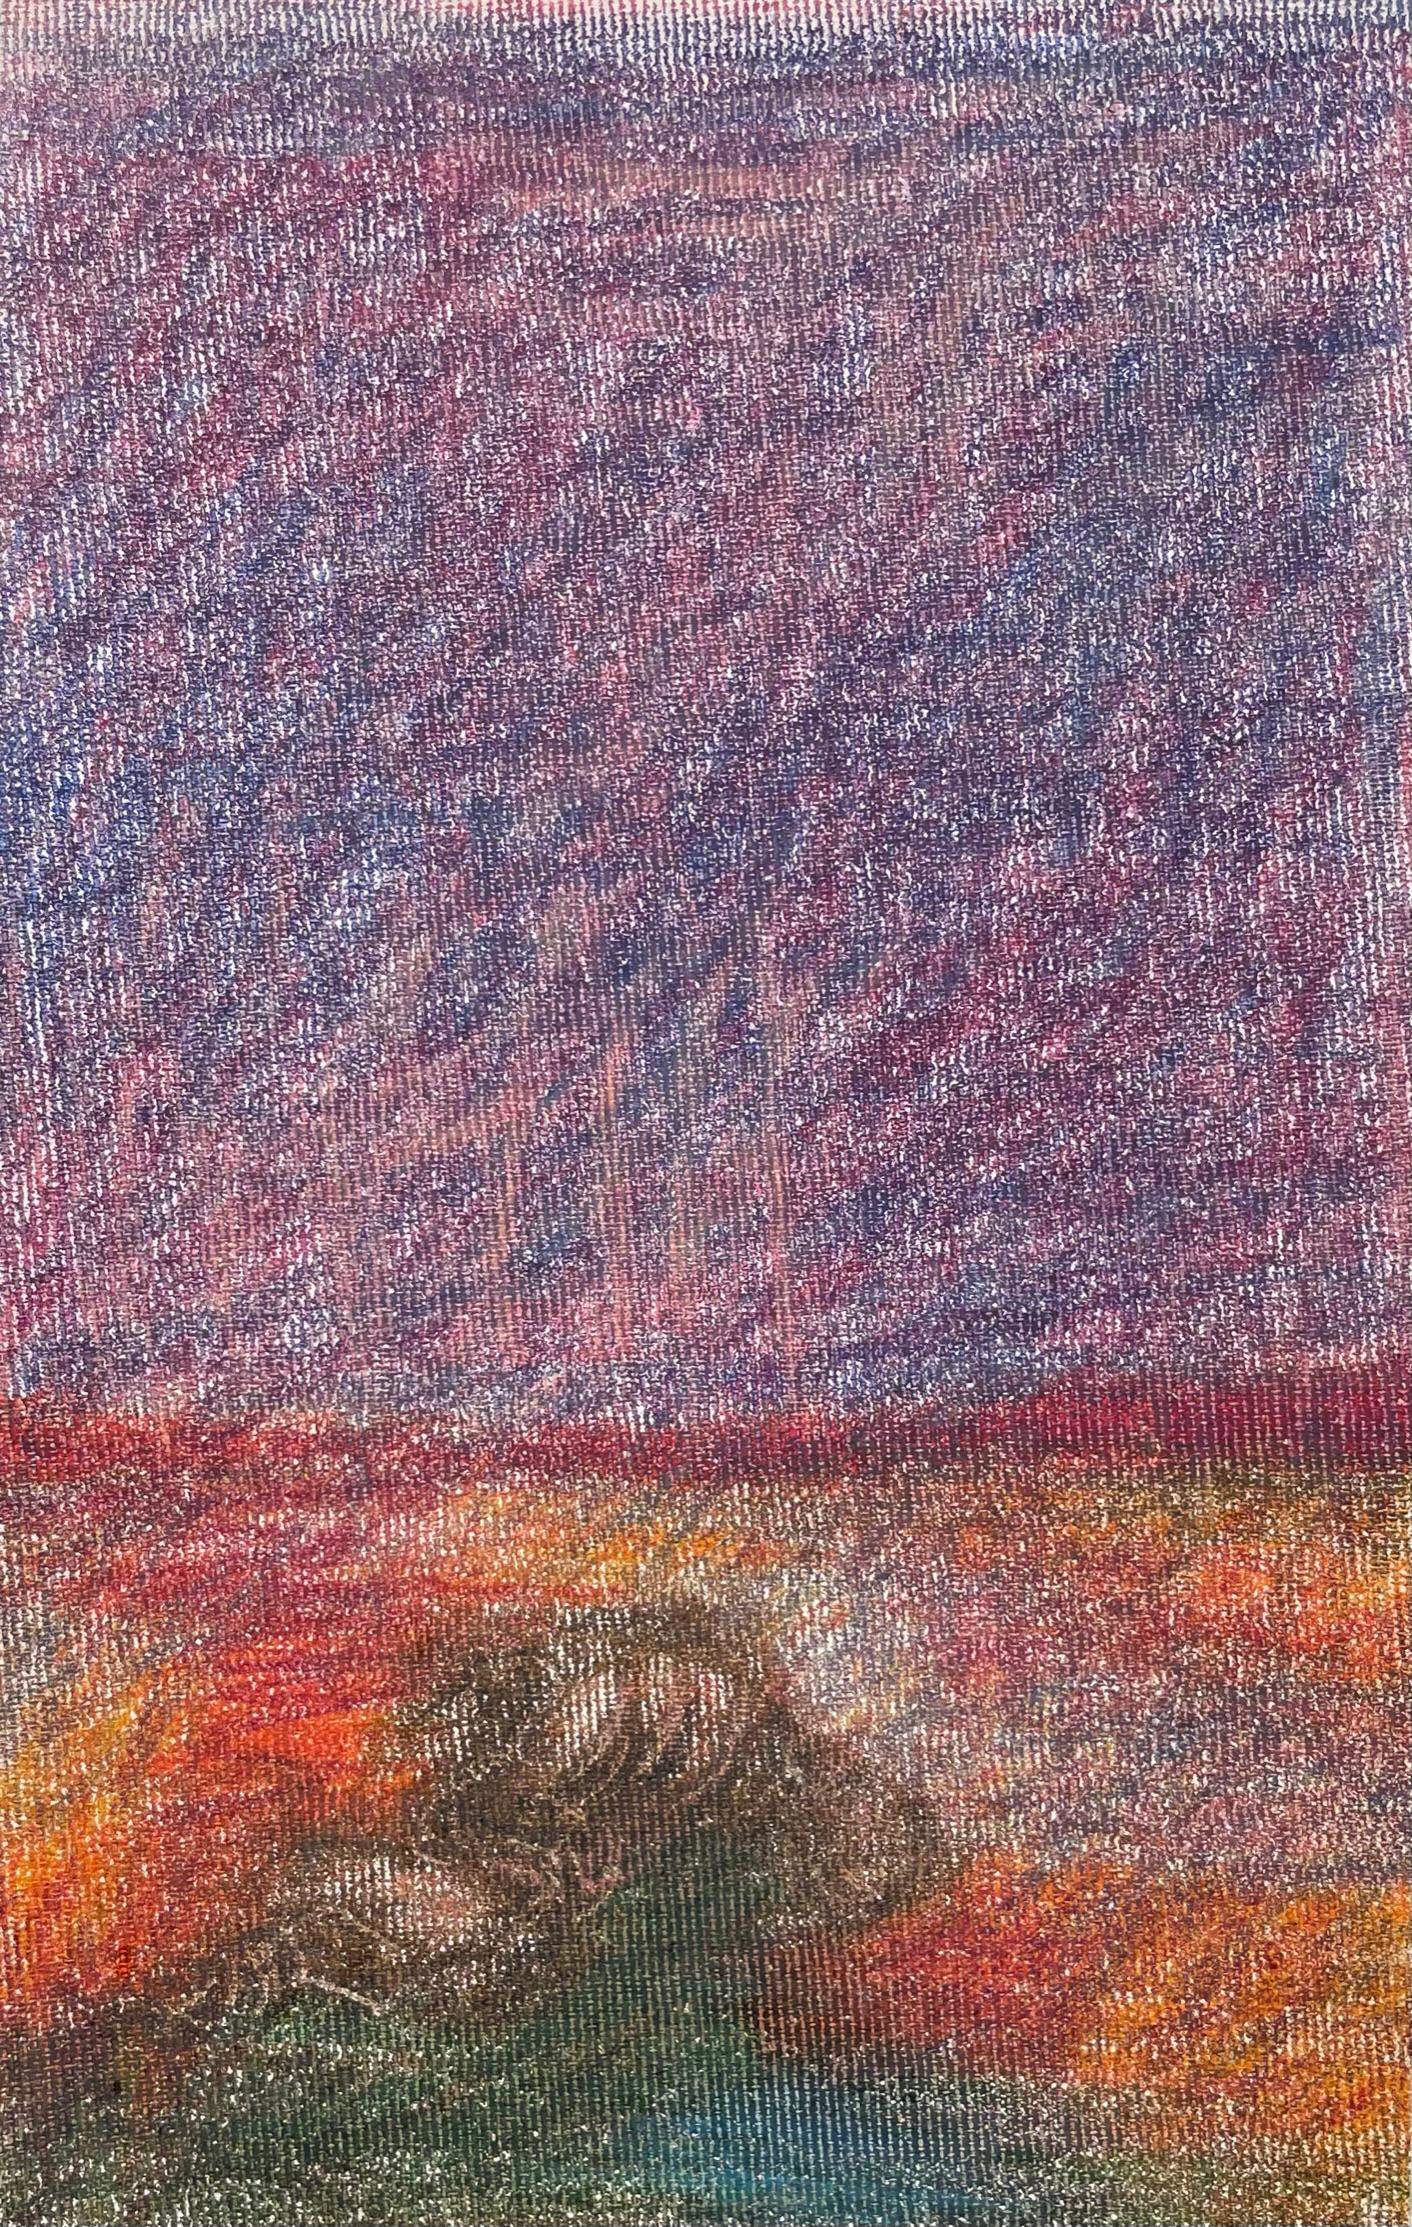 Zsolt Berszán Landscape Art - Body in the Field #1 - Red, Landscape, Coloured pencil, Drawing